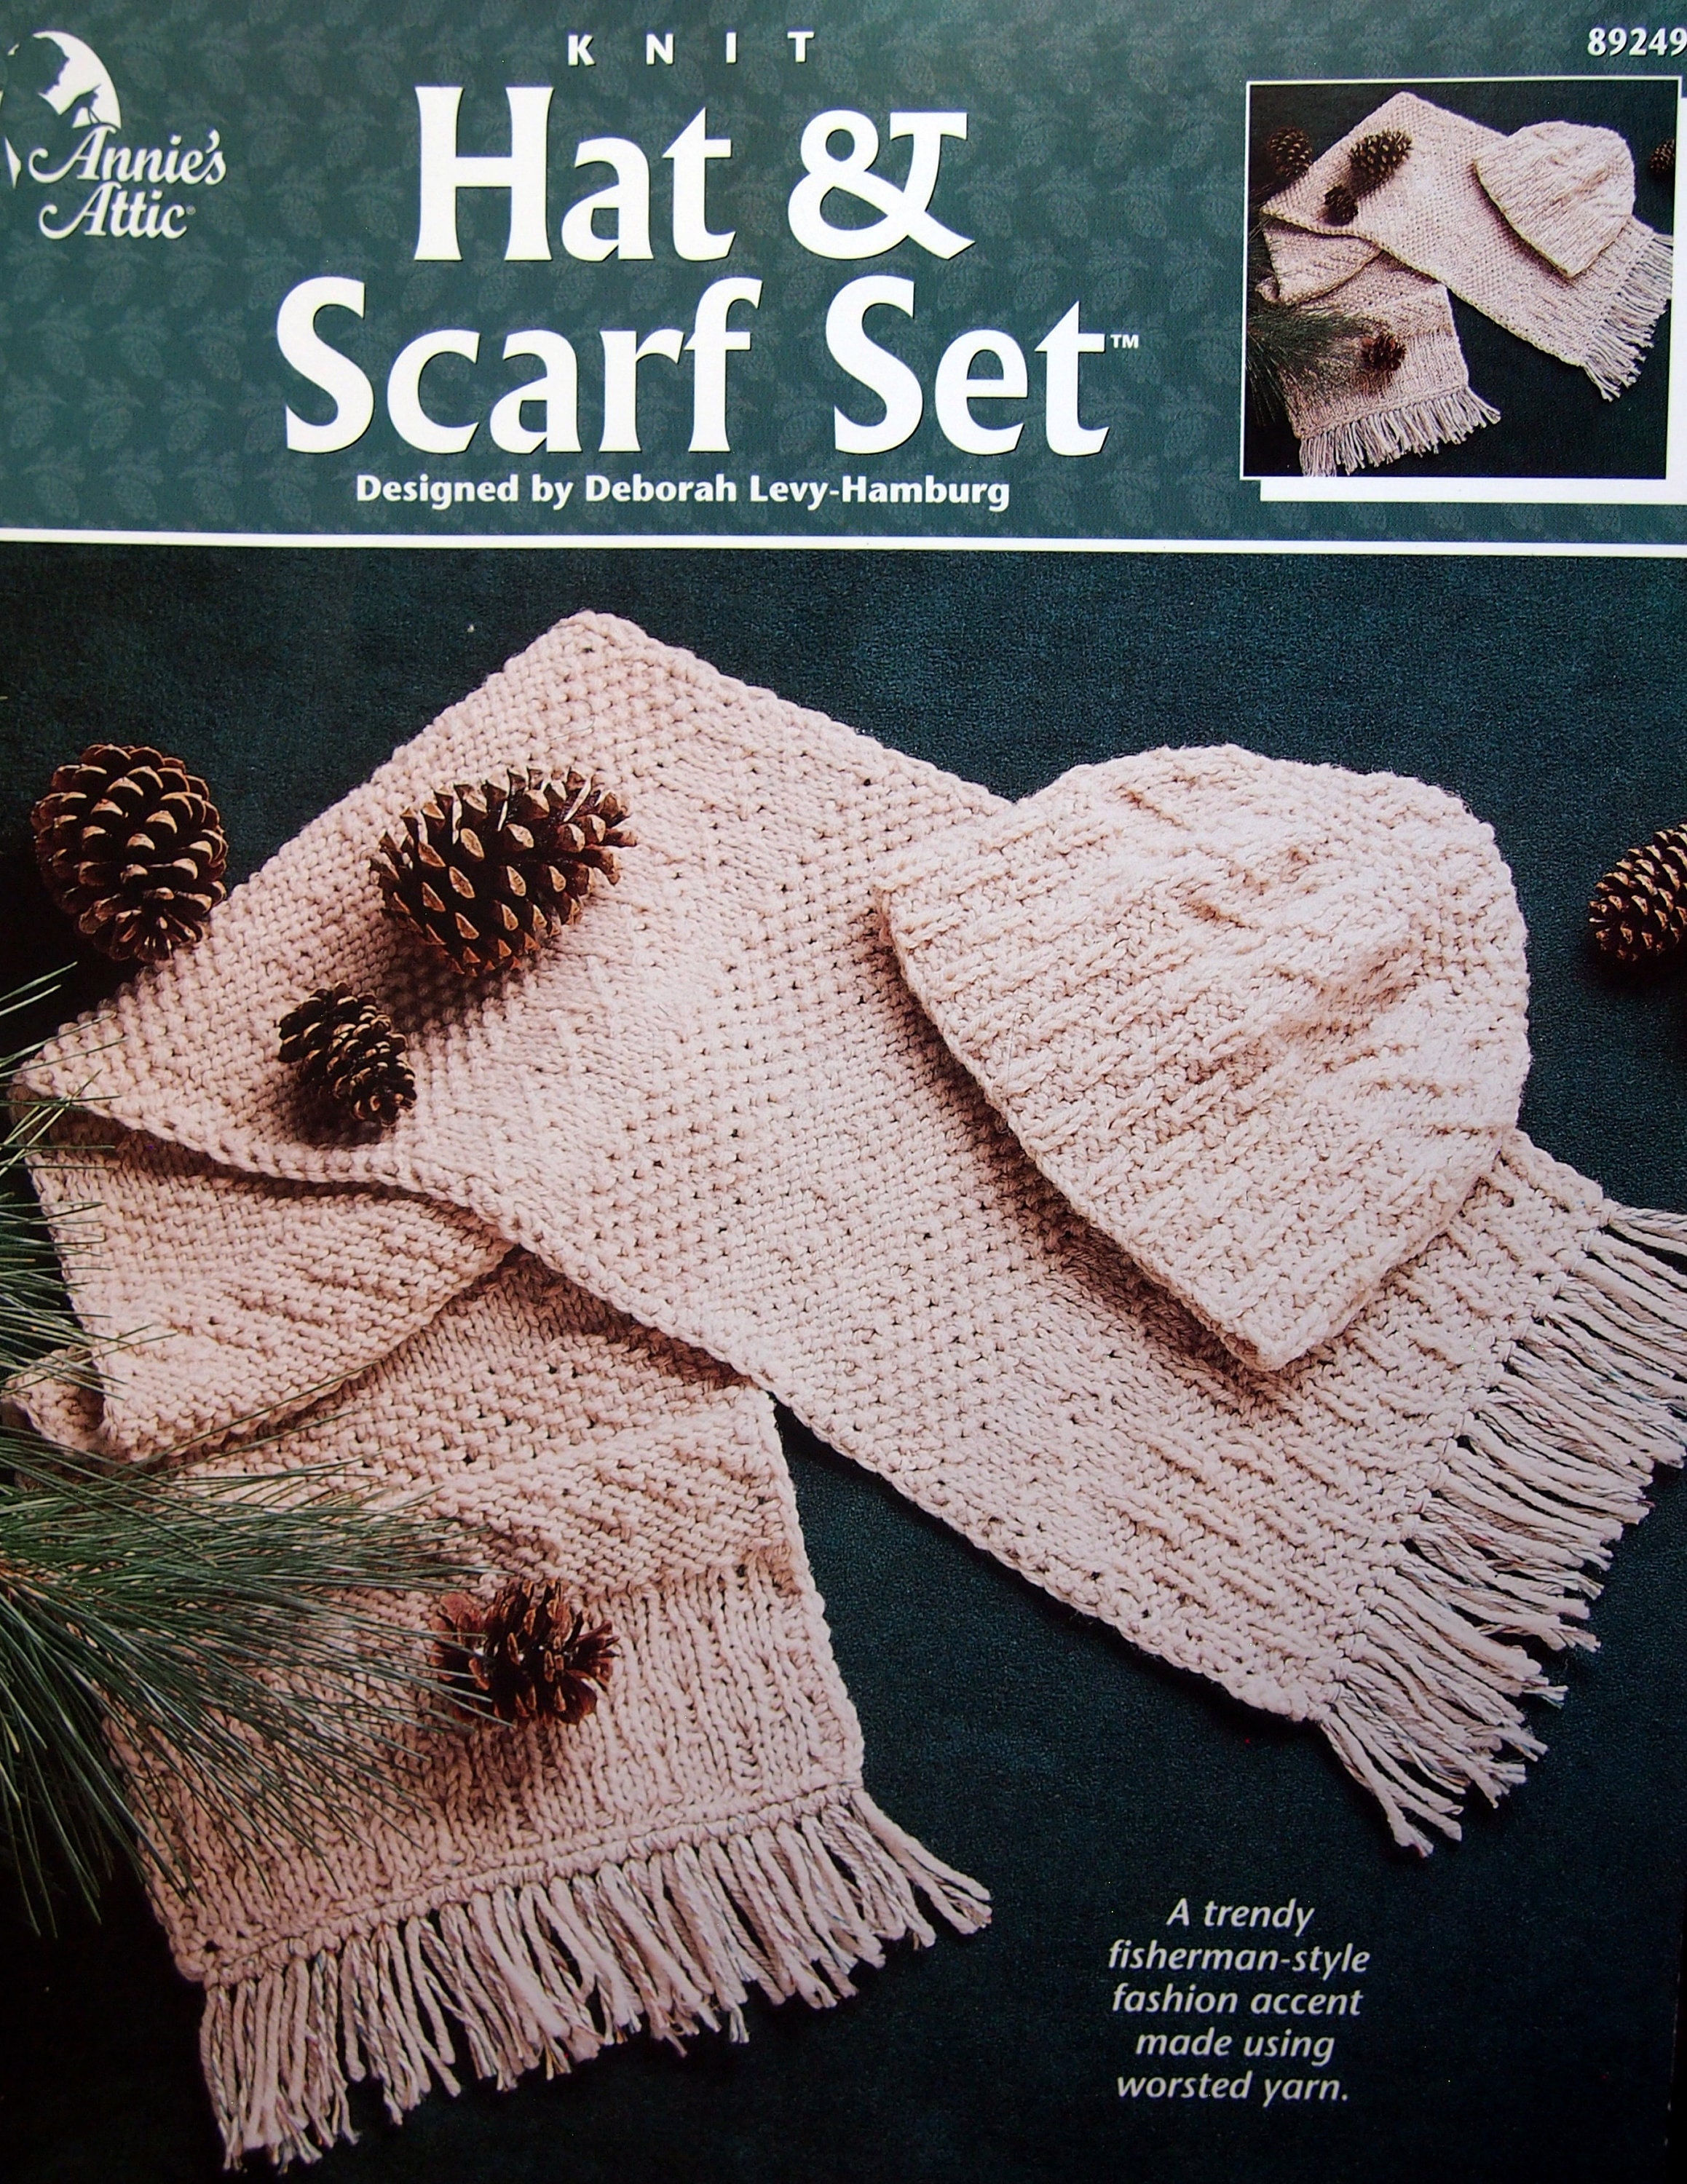 Hat & Scarf Set by Deborah Levy-hamburg and Annie's Attic Vintage Knitting  Pattern Leaflet 2000 